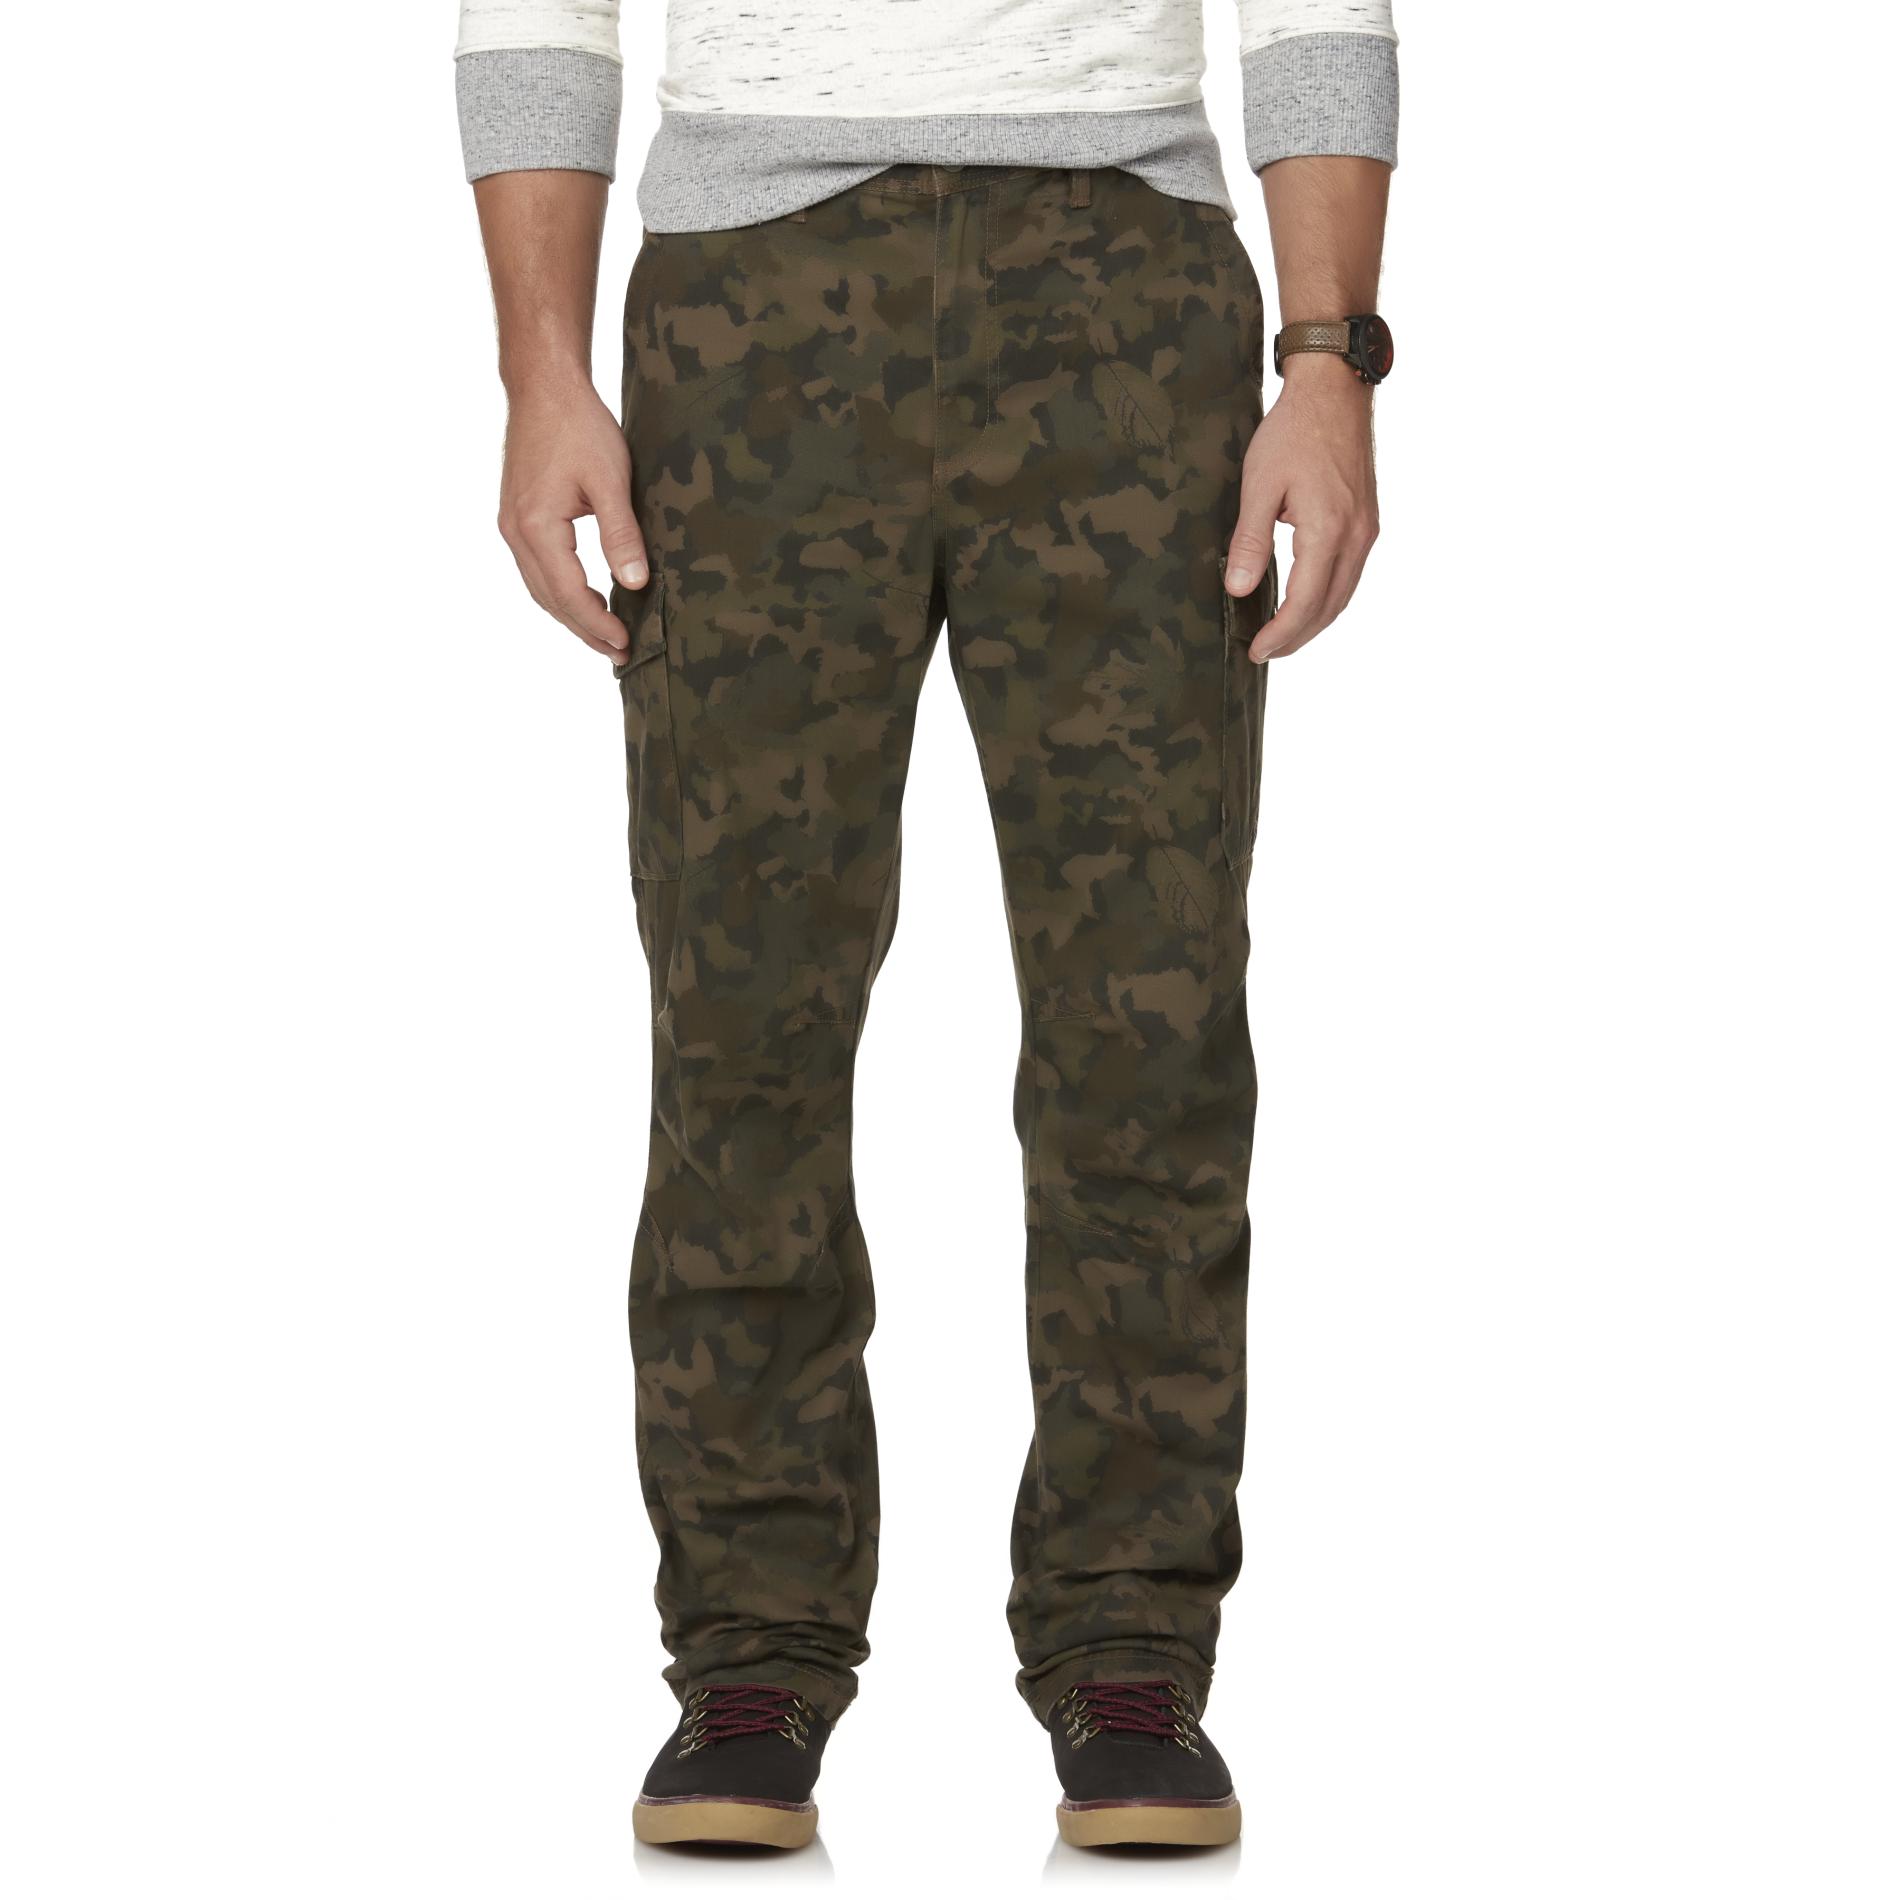 Northwest Territory Men's Cargo Pants - Camouflage